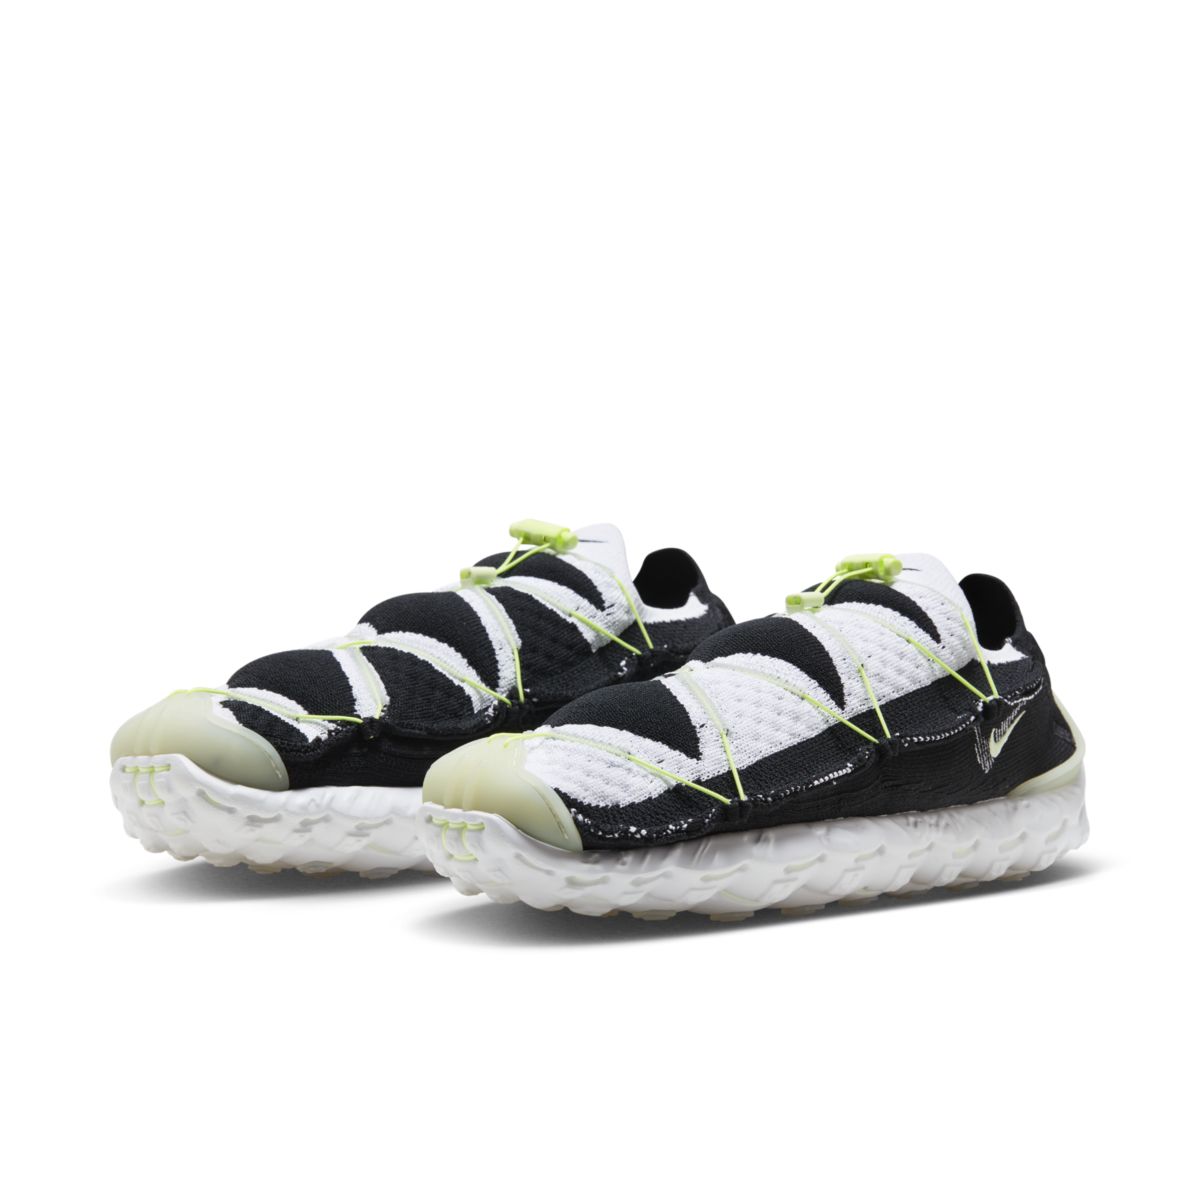 Nike ISPA MindBody Black White DH7546-002 E